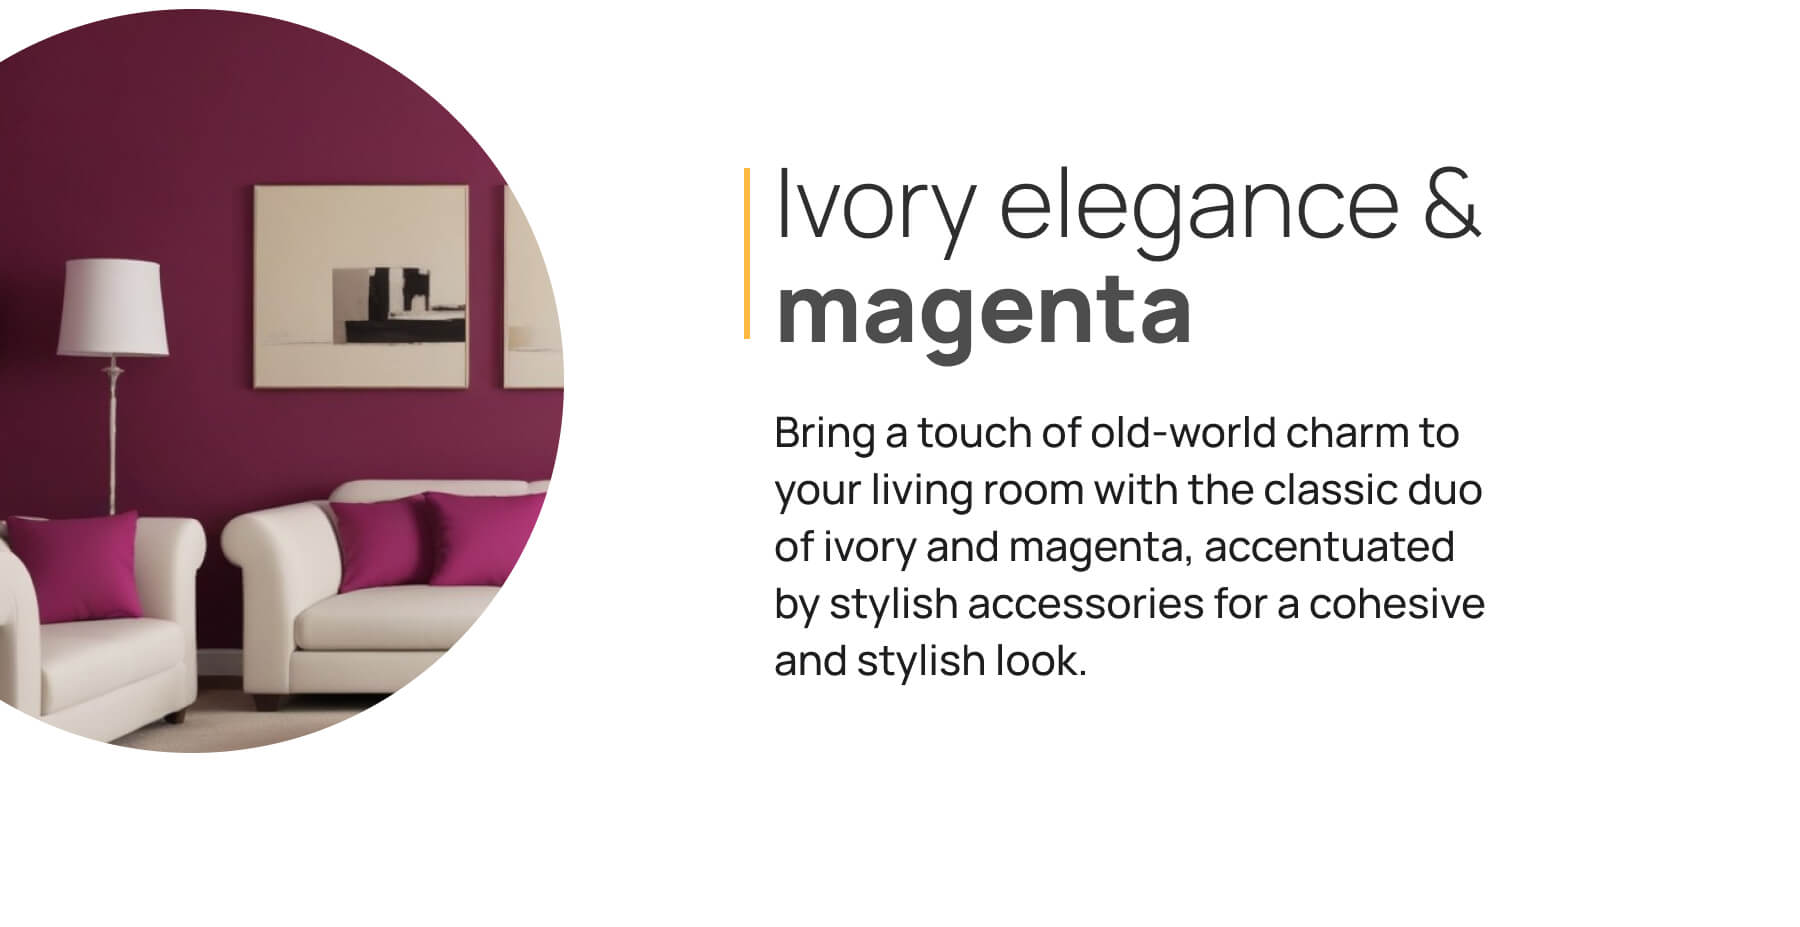 Ivory elegance & magenta